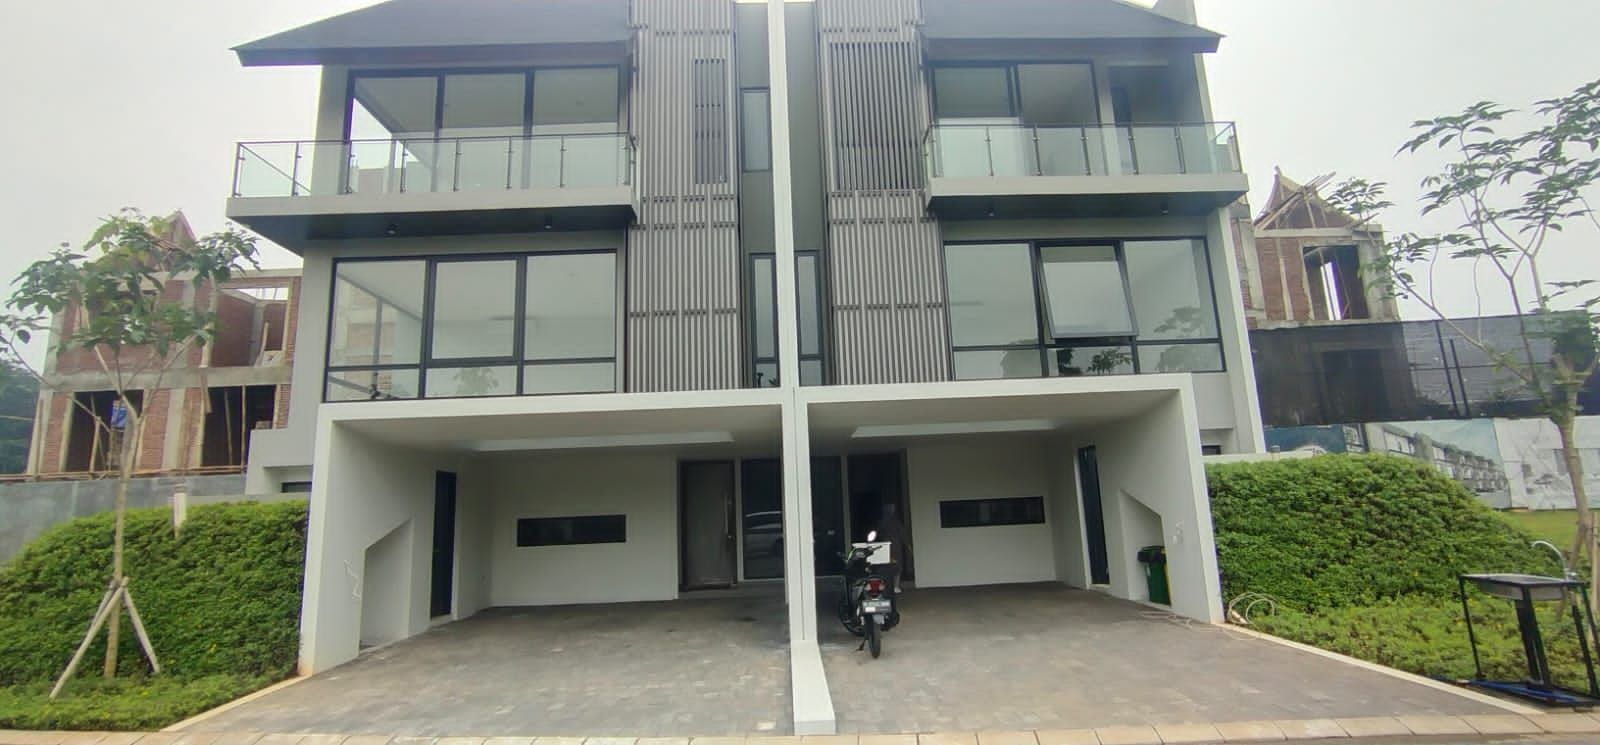 Harga Rumah Modern Di Jakarta Selatan